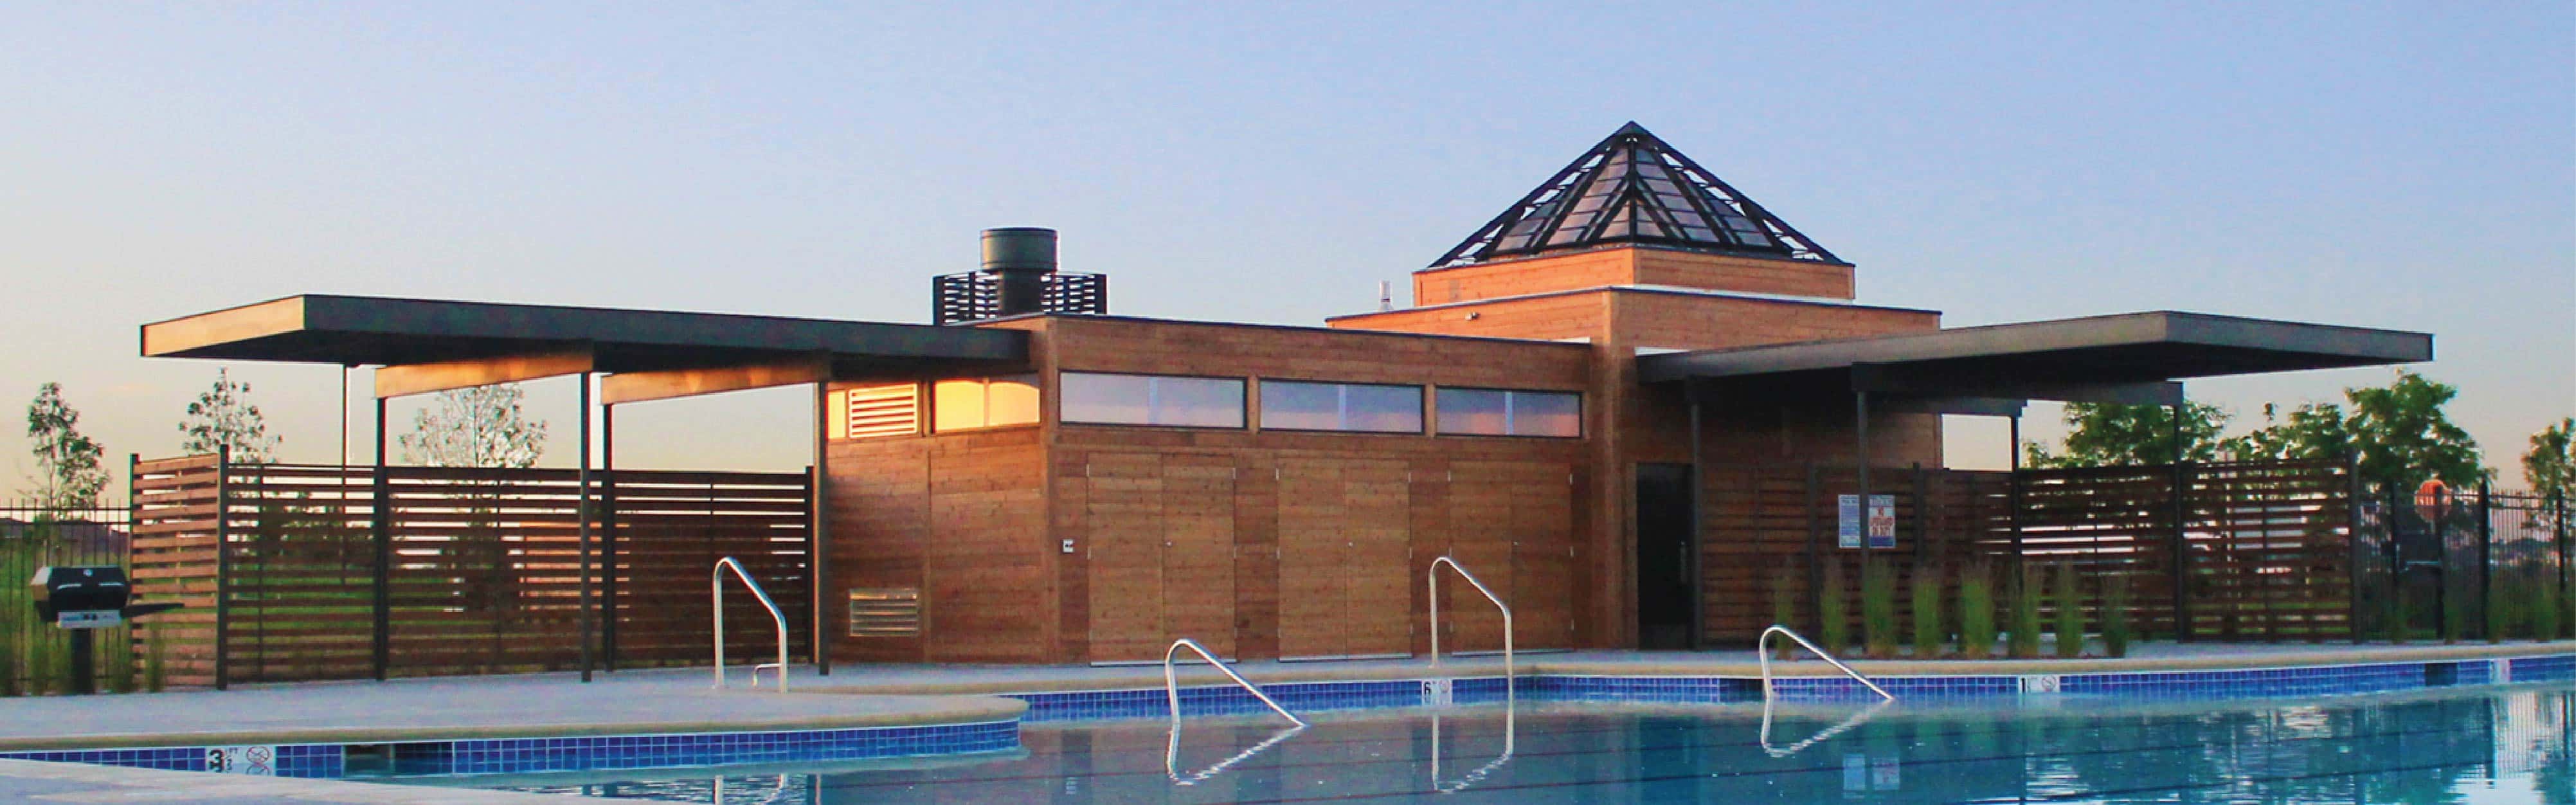 Pool House Architecture Design in Colorado